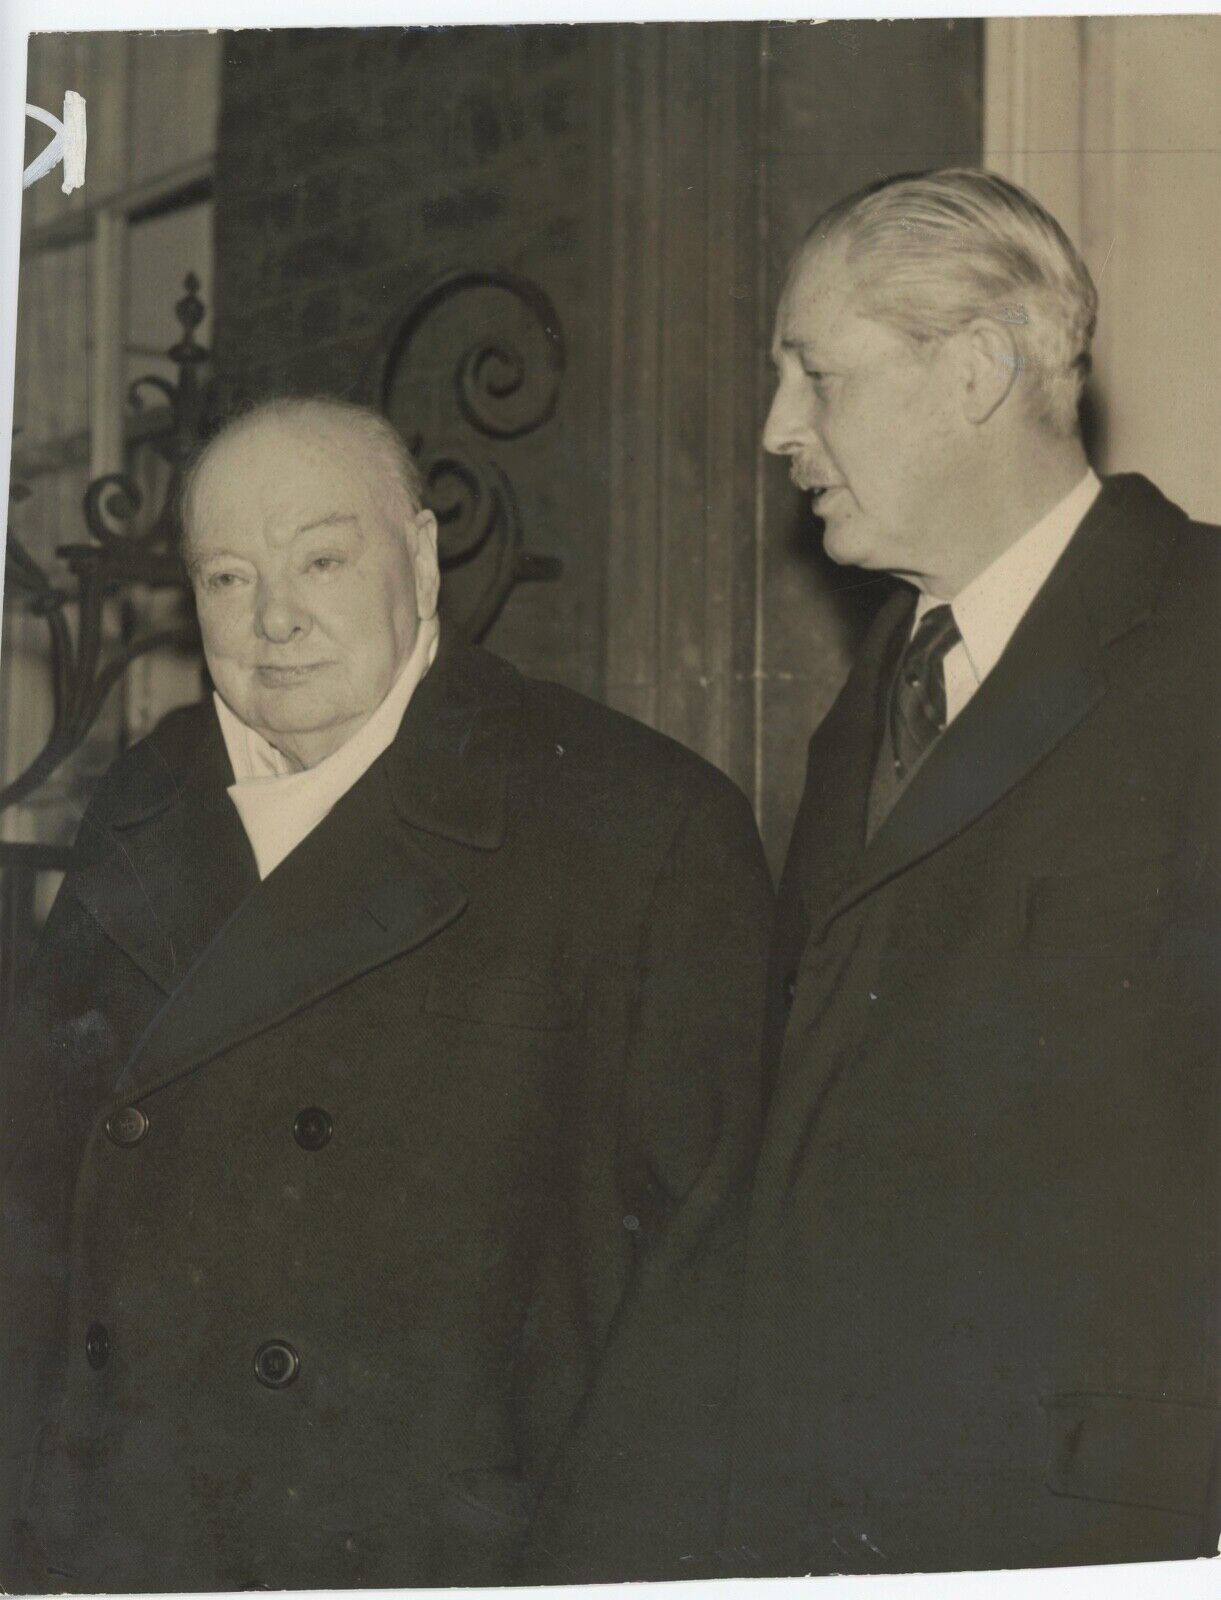 13 December 1957 press photo of Sir Winston S. Churchill with Harold Macmillan